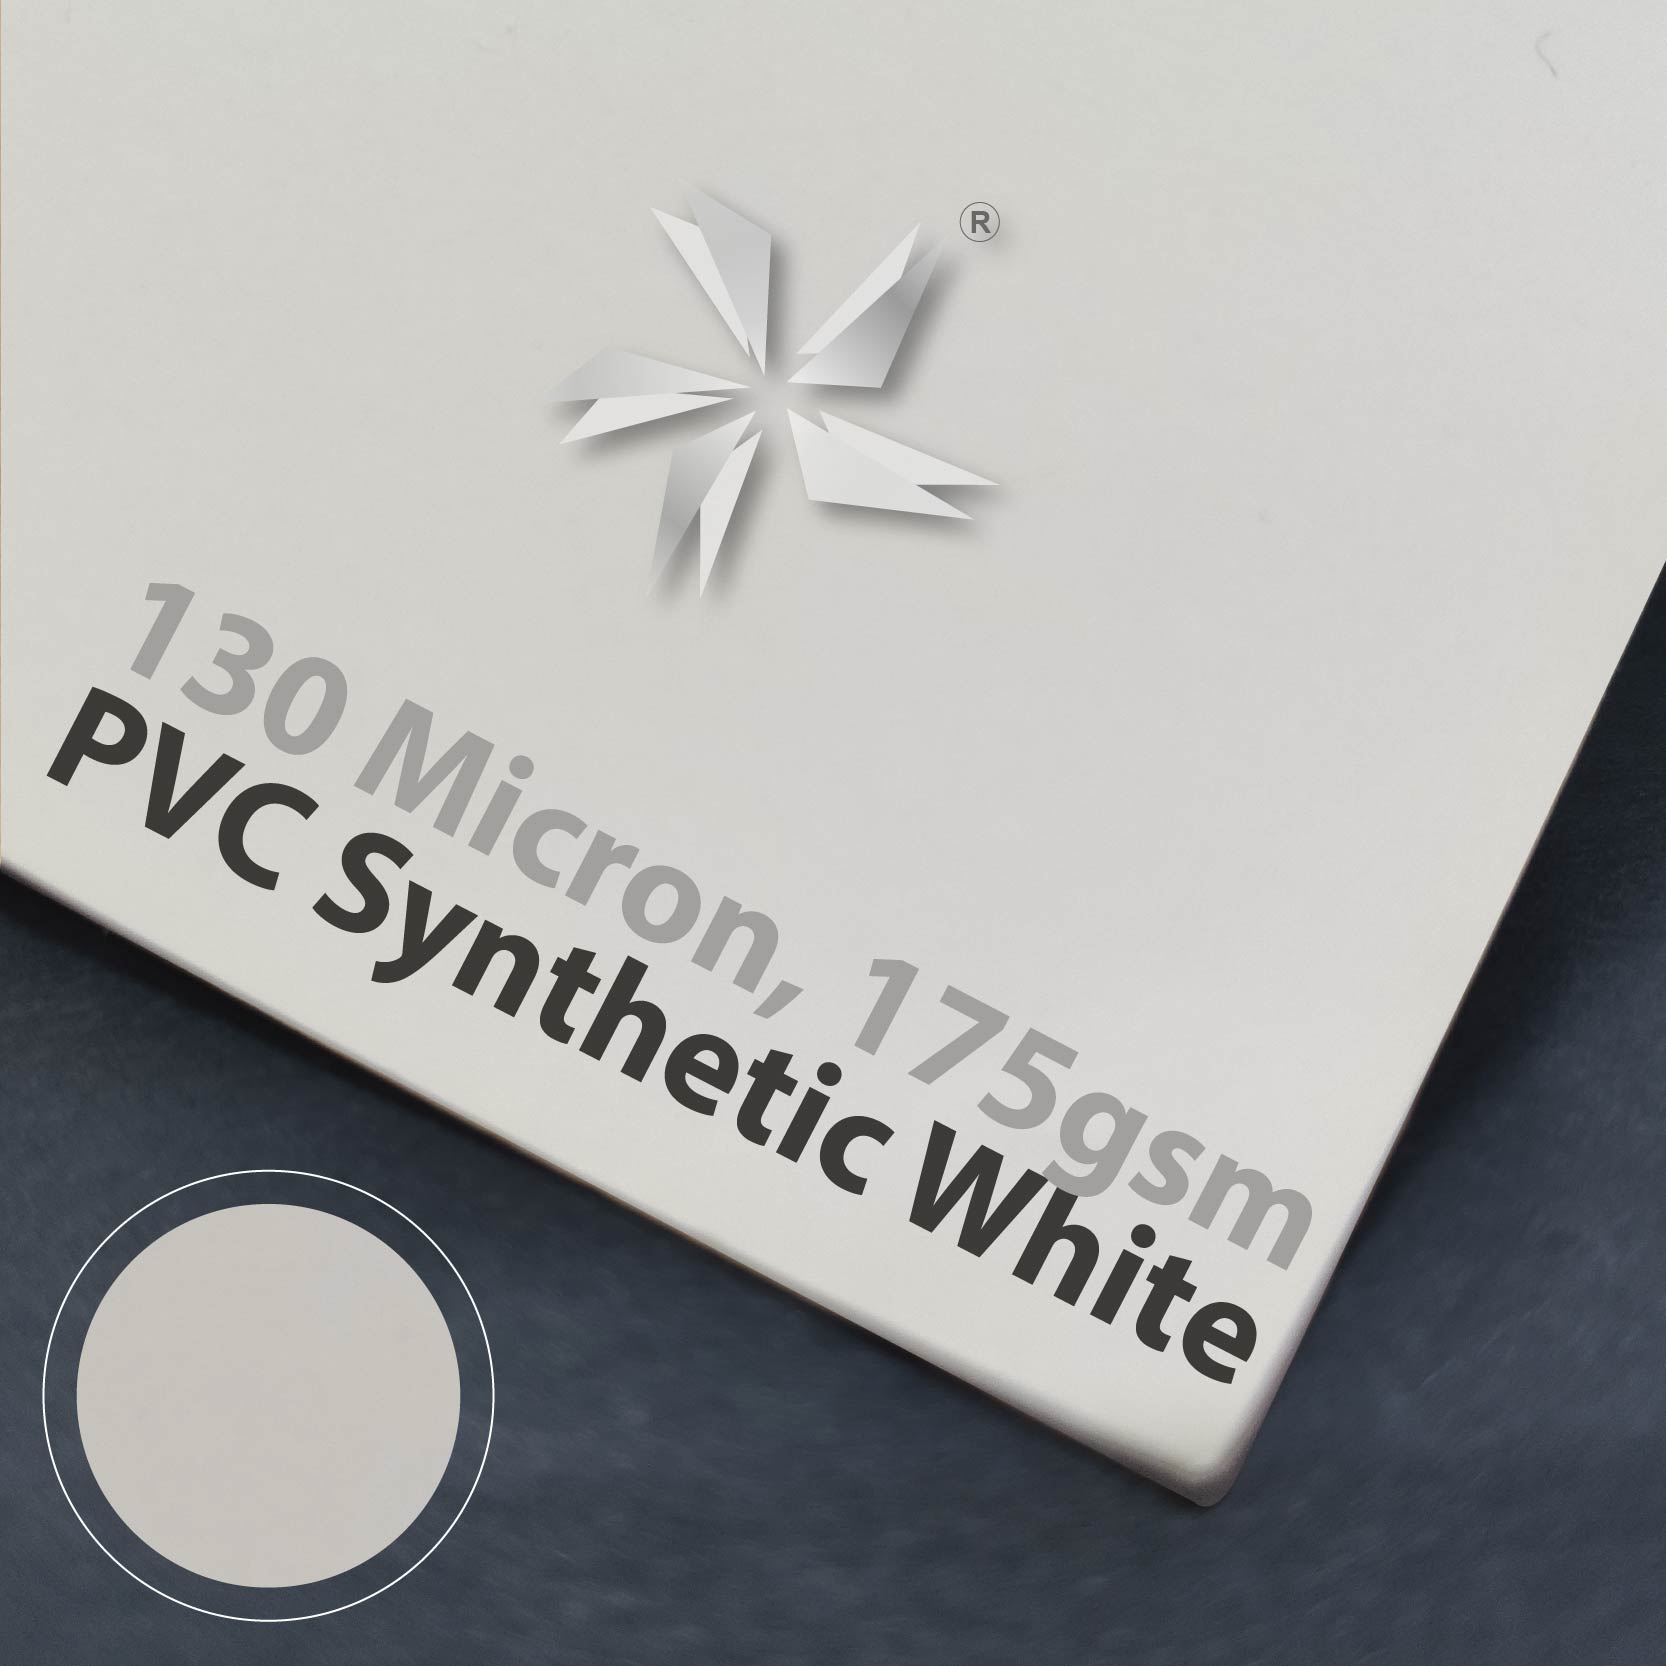 PVC Synthetic White 130 Micron - 175gsm